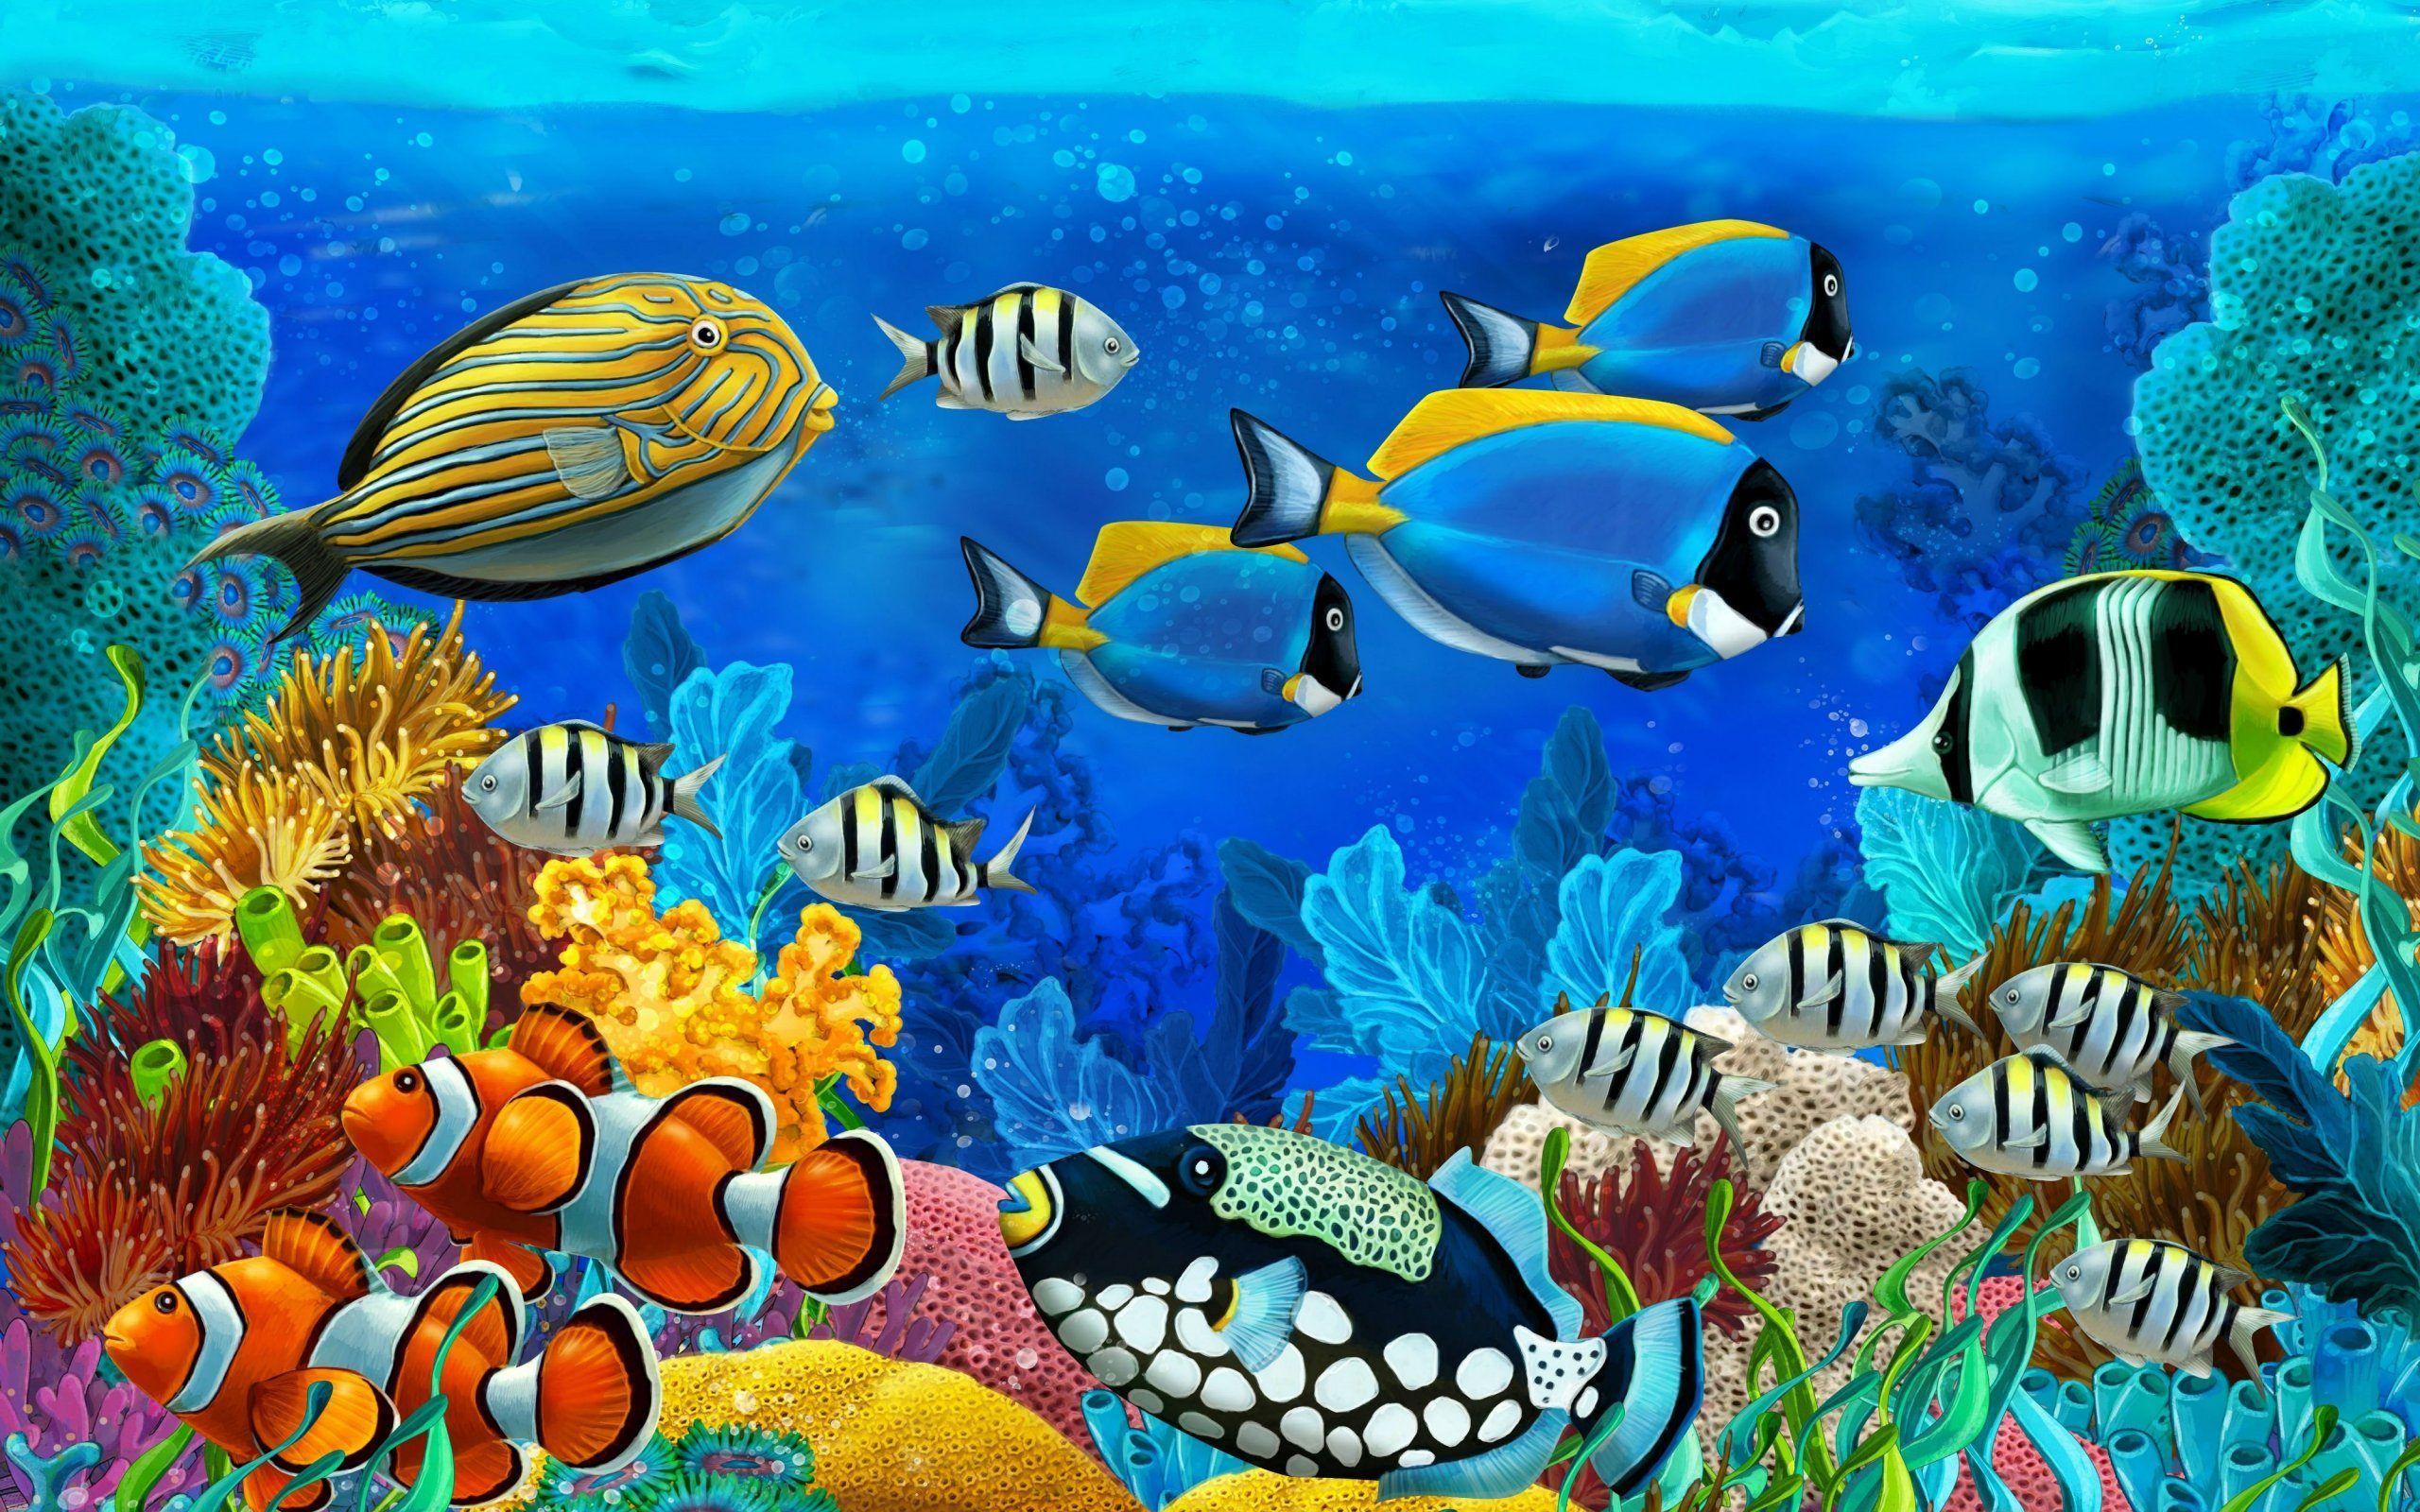 HD Ocean Sea Life Wallpaper, Widescreen Wallpaper Of Ocean Sea